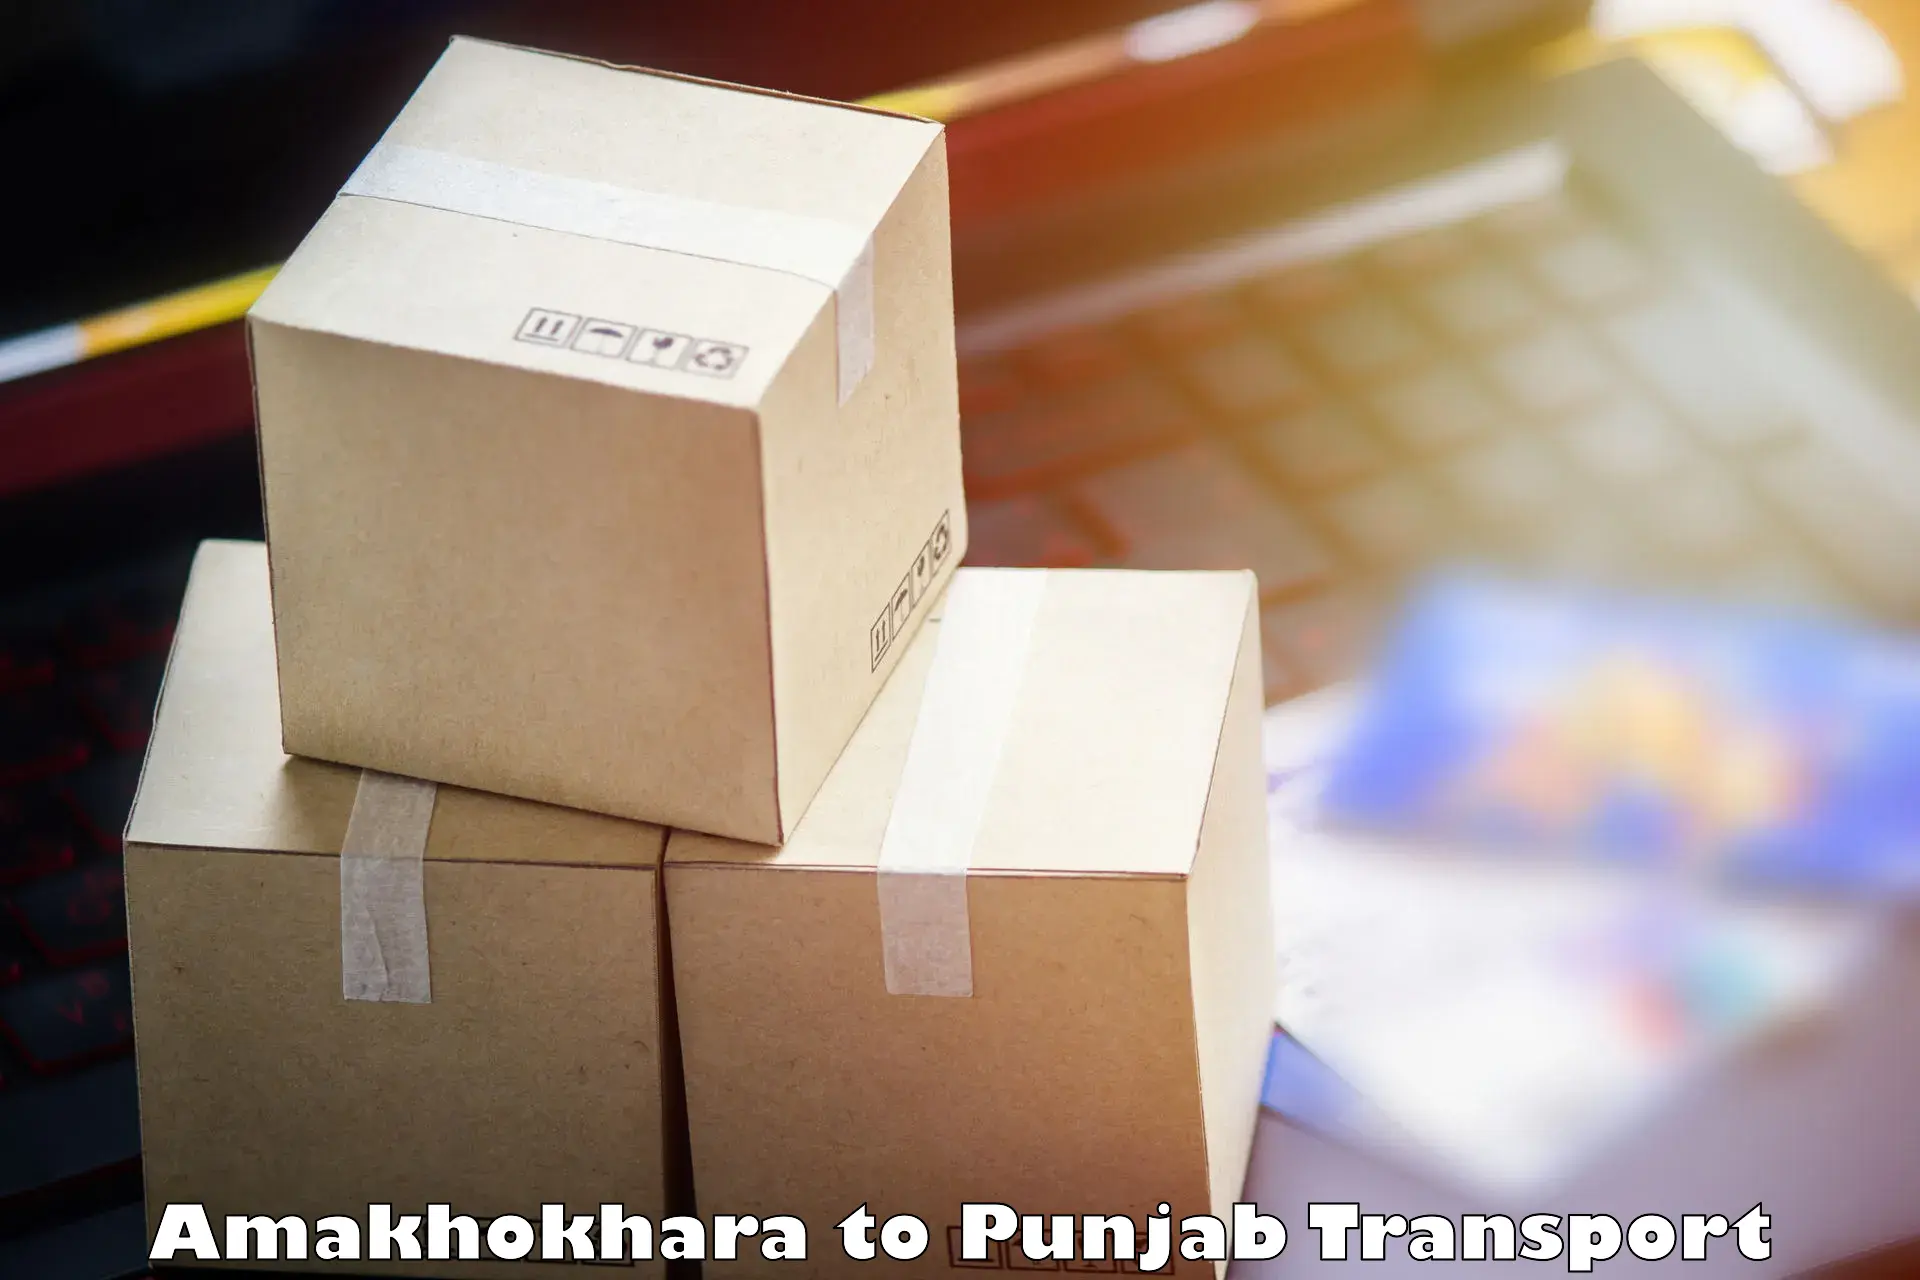 Truck transport companies in India Amakhokhara to Samana